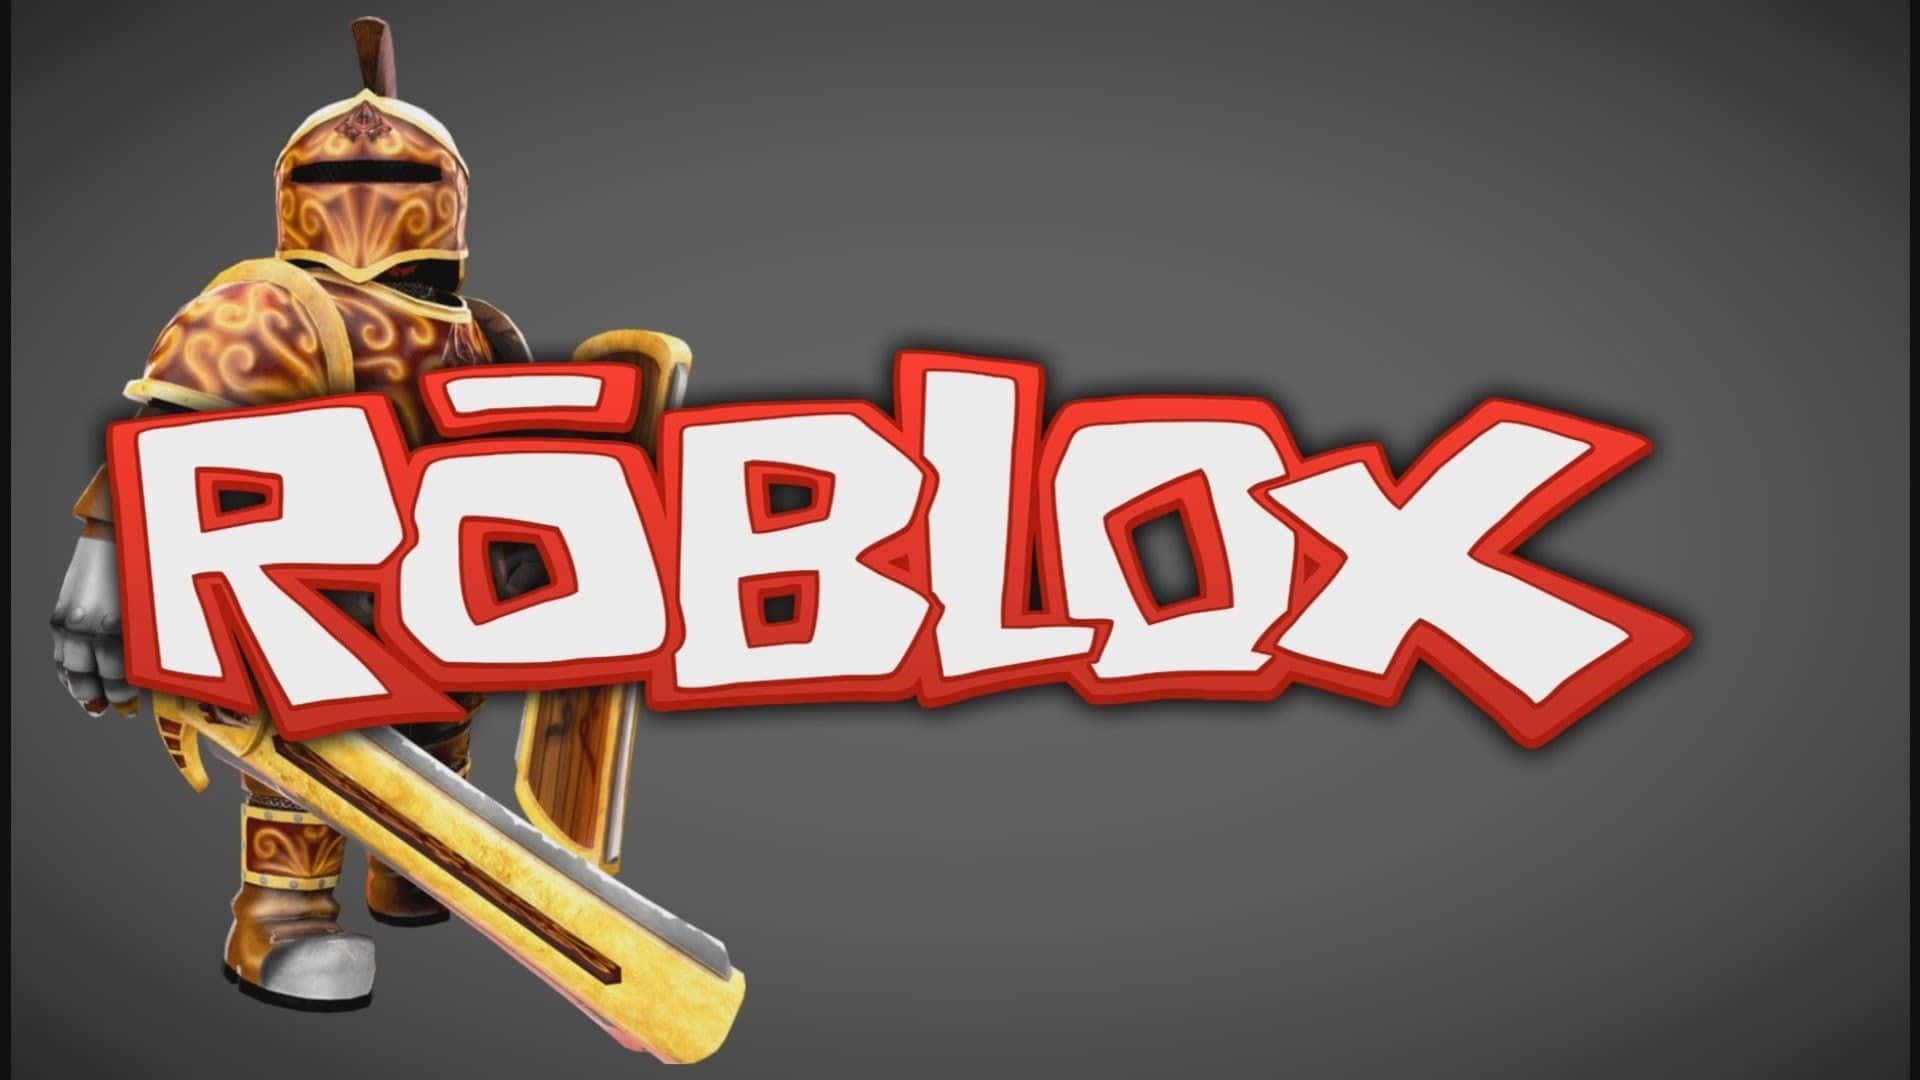 Roblox Background